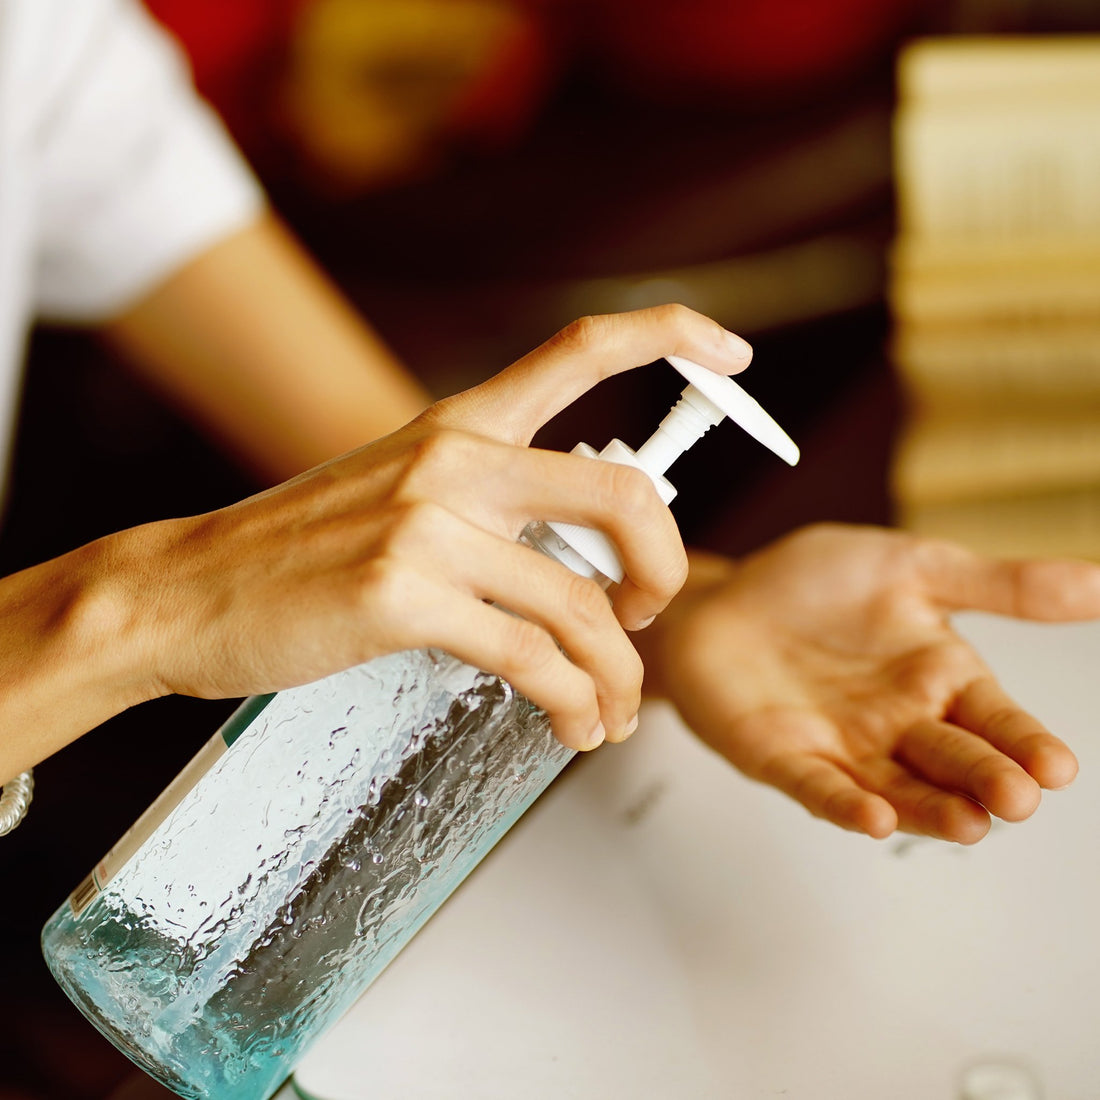 Tips to Maintain Hygiene during Corona Virus Scare